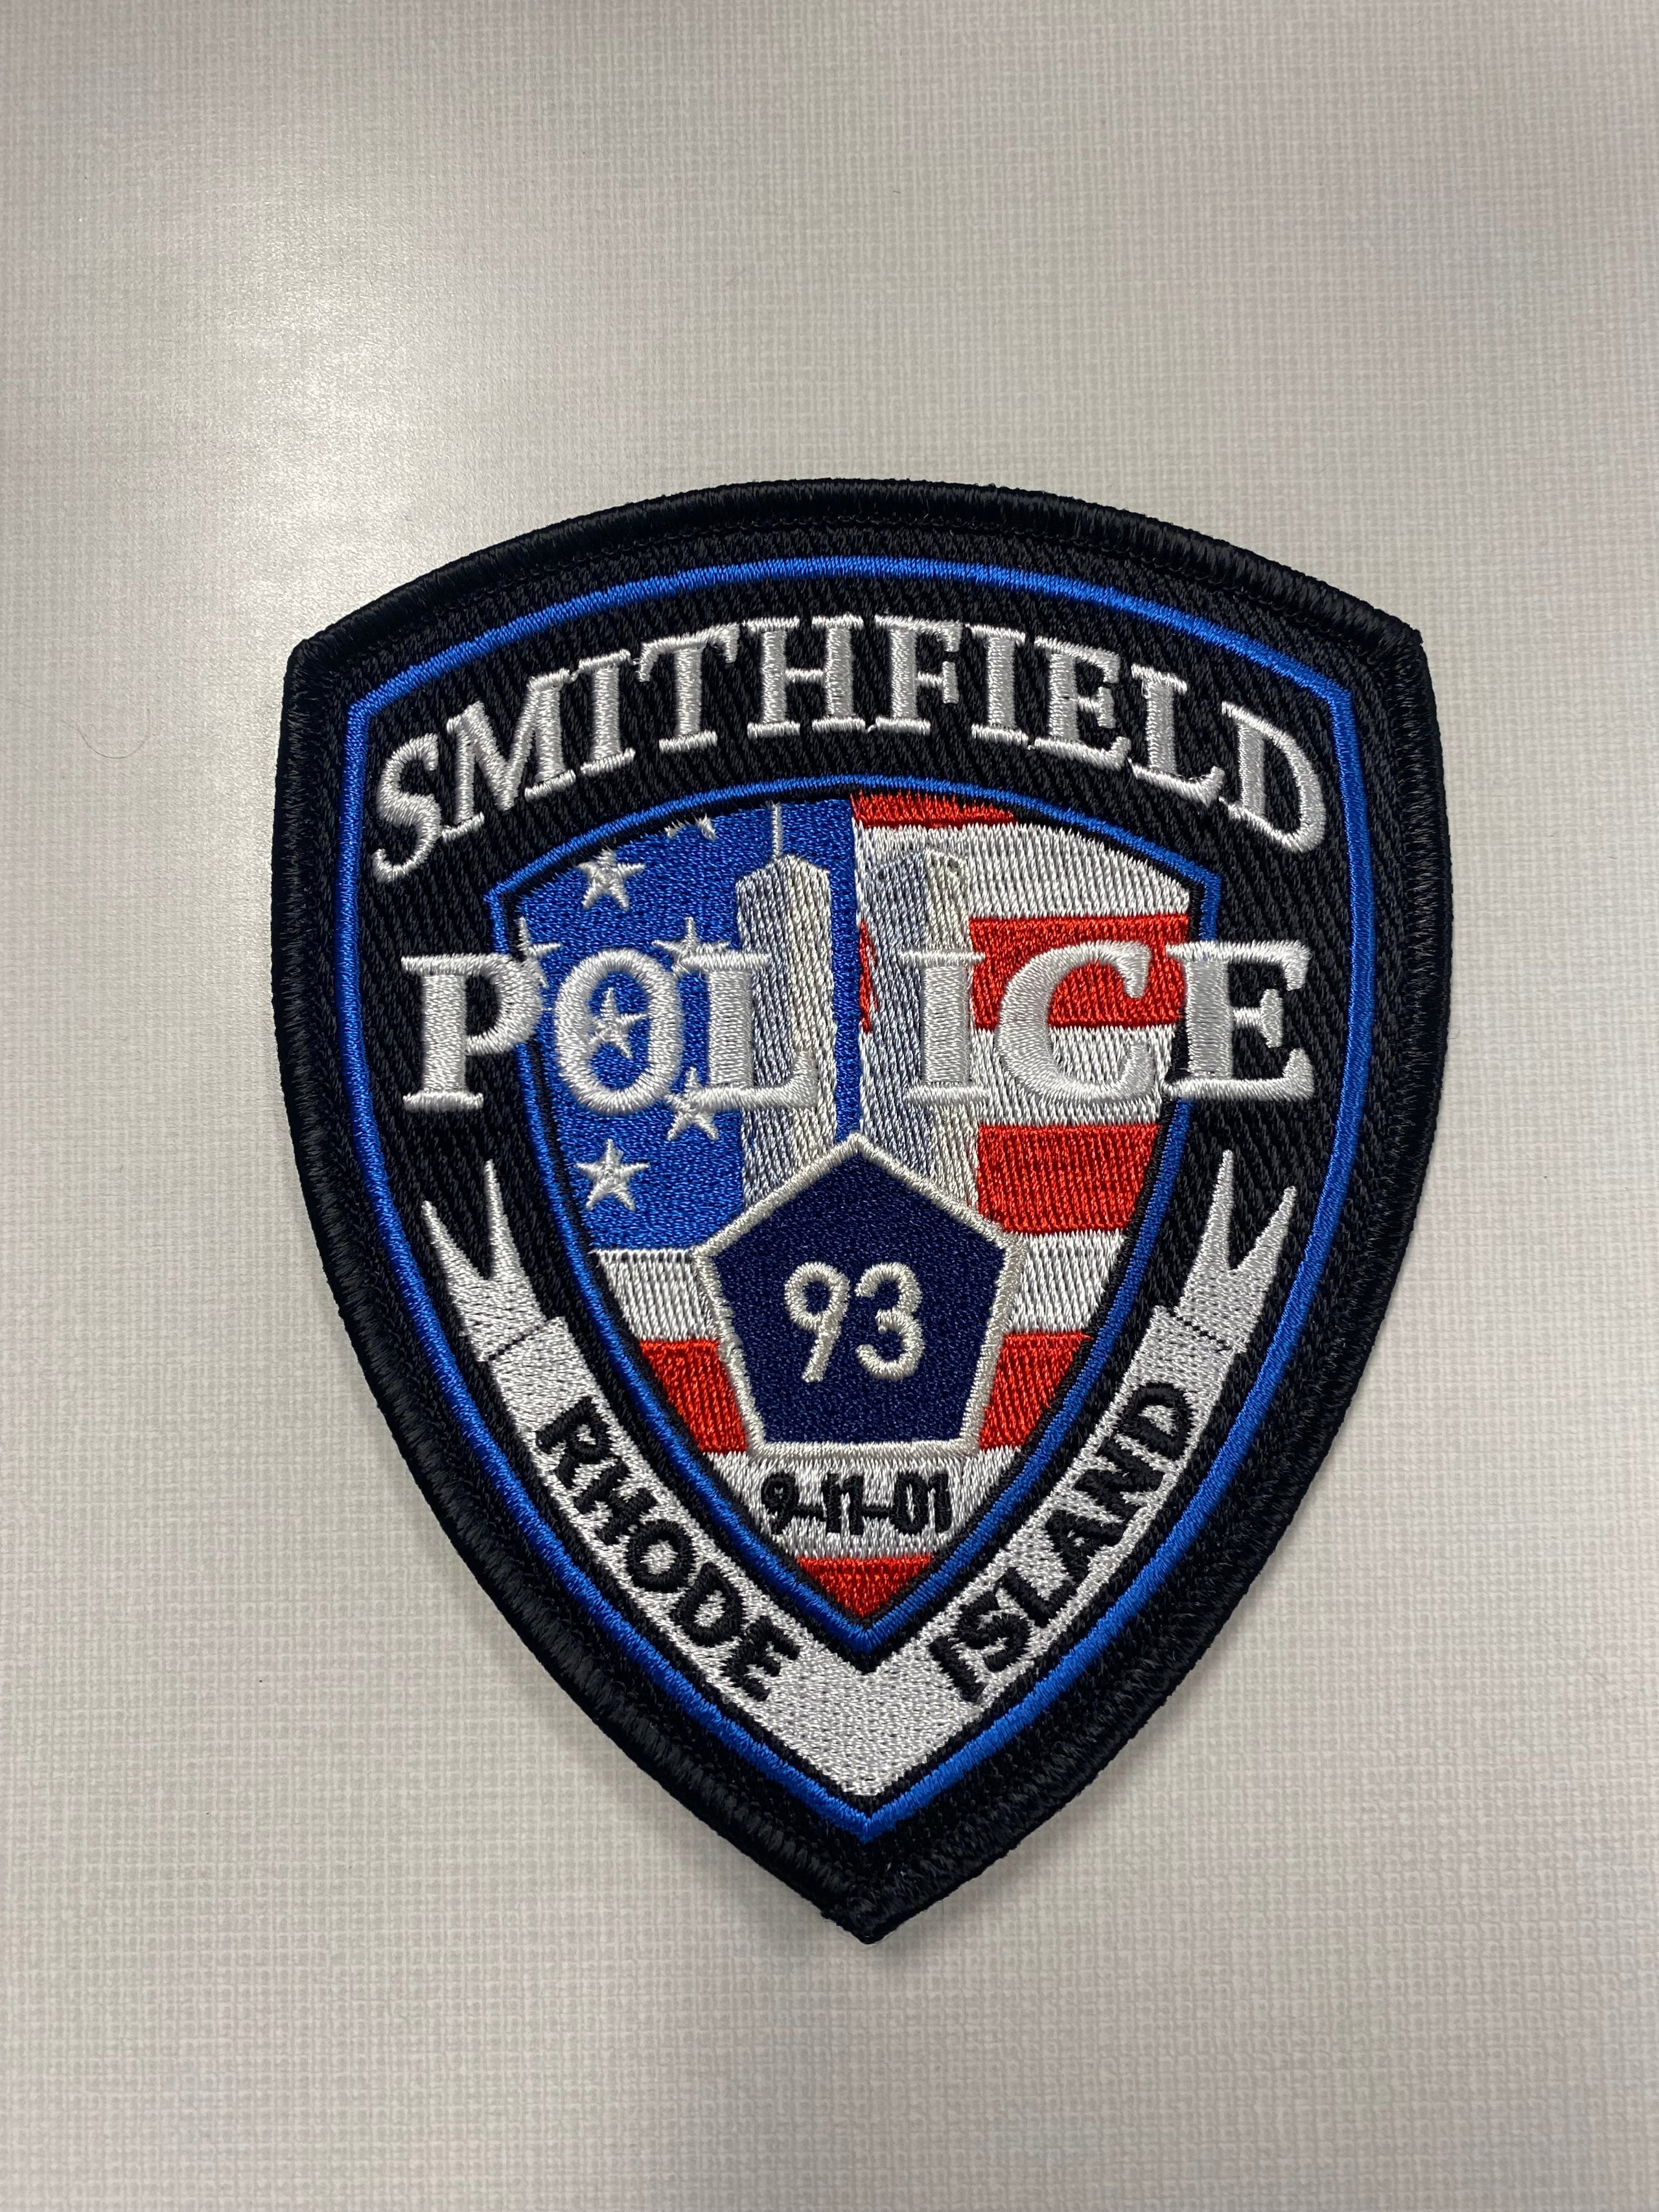 Smithfield Police Department Announces New Shoulder Patch Design